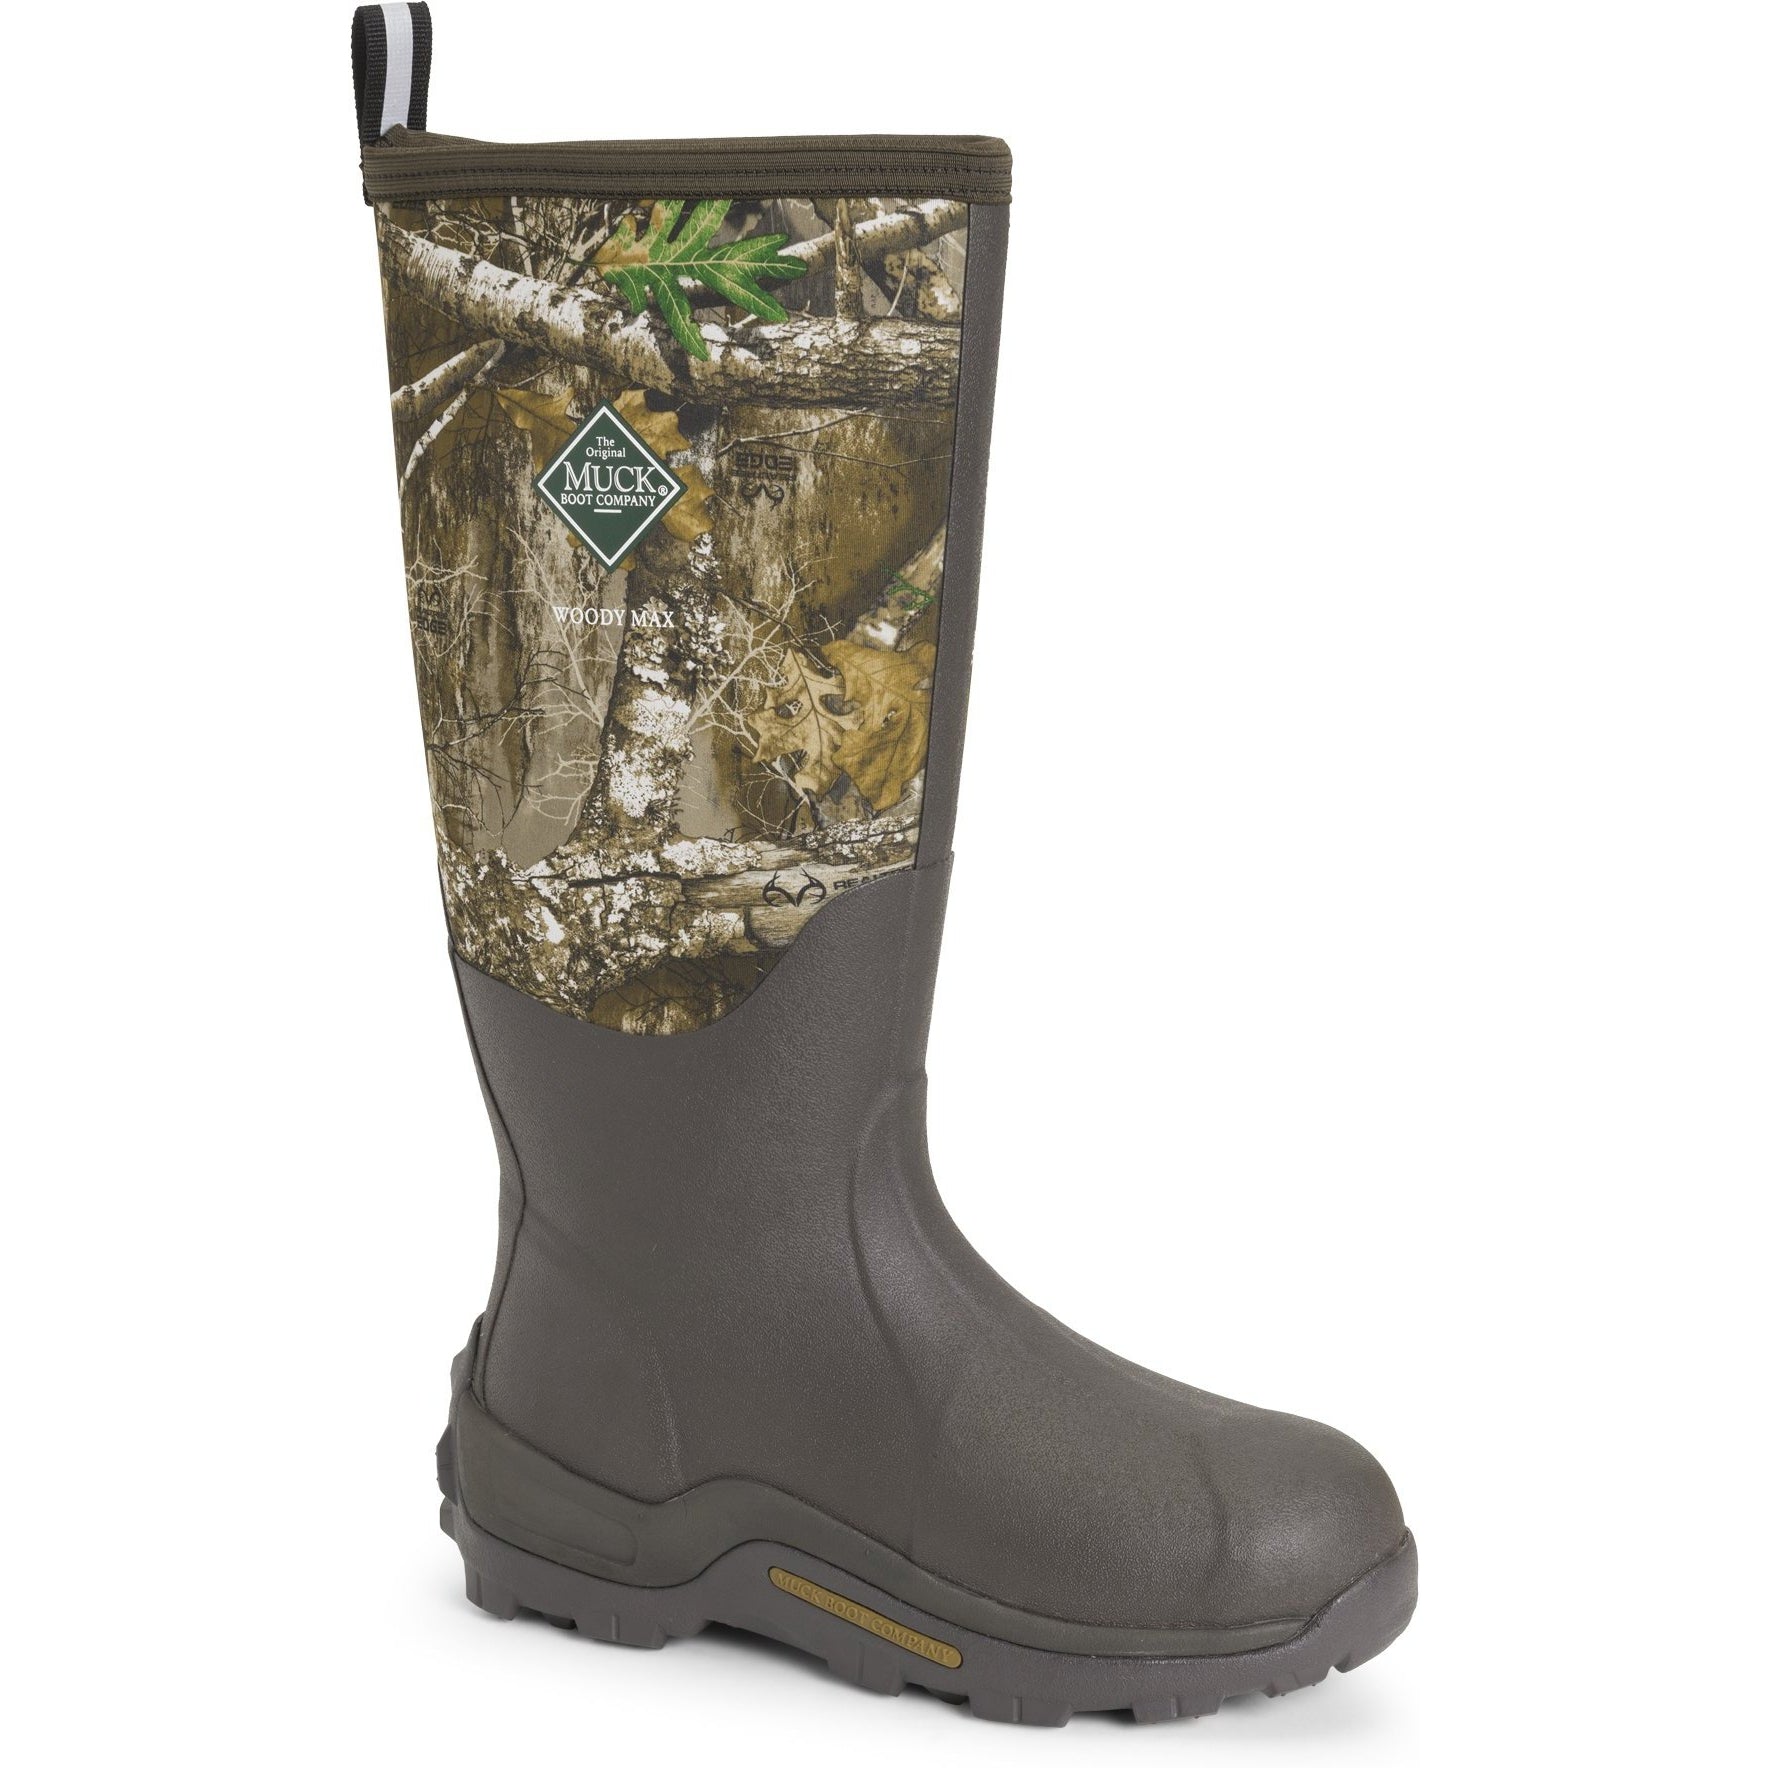 Muck Men's Woody Max WP Rubber Hunt Boot - Brown/Realtree Edge - WDM-RTE 7 / Realtree Edge / Medium - Overlook Boots